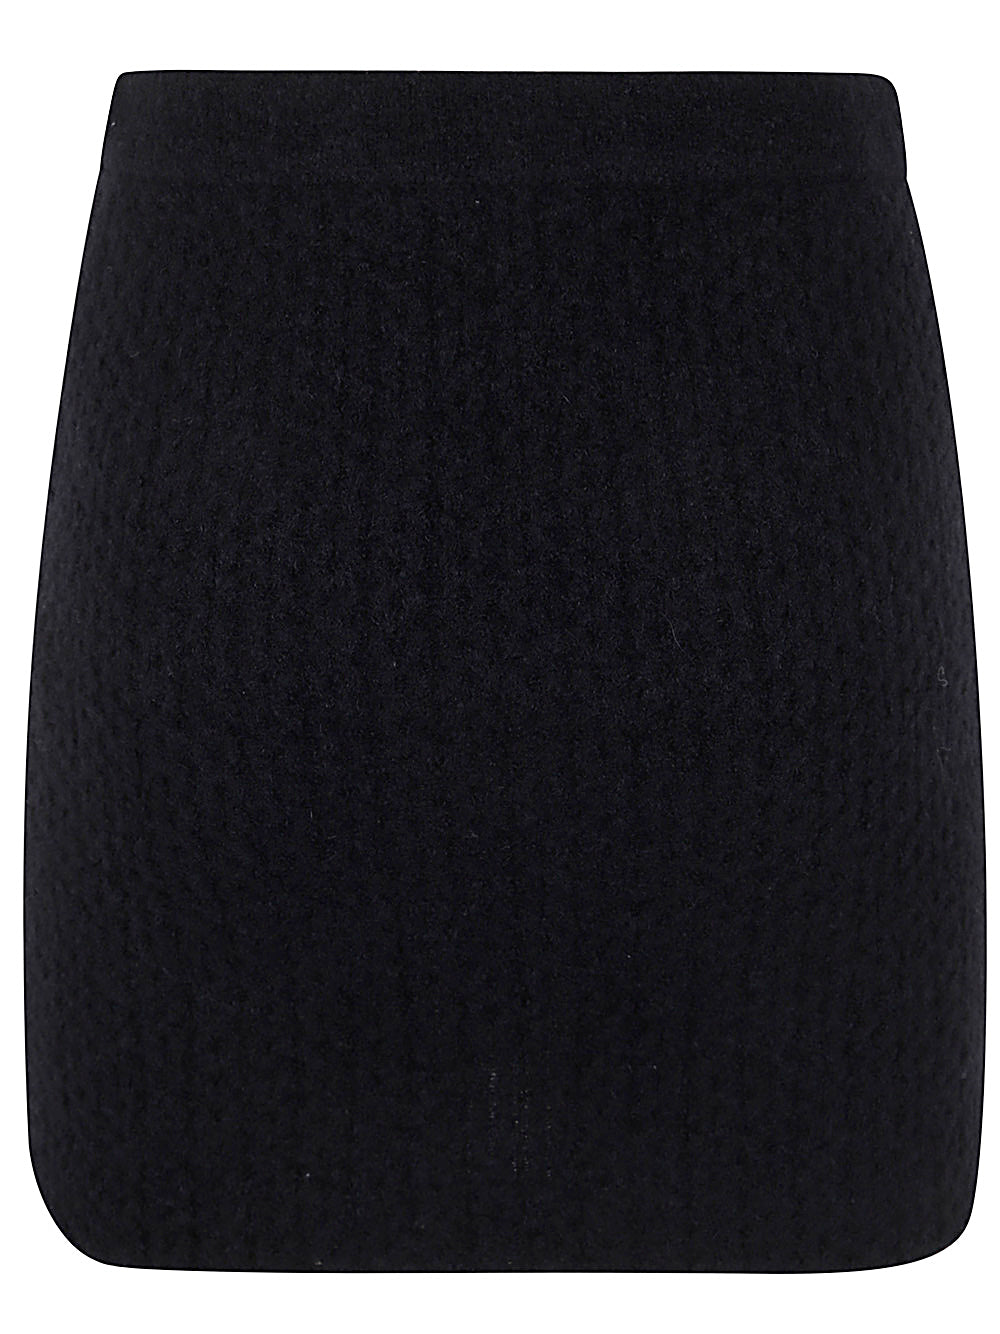 Black Cashmere Blend Knit Skirt